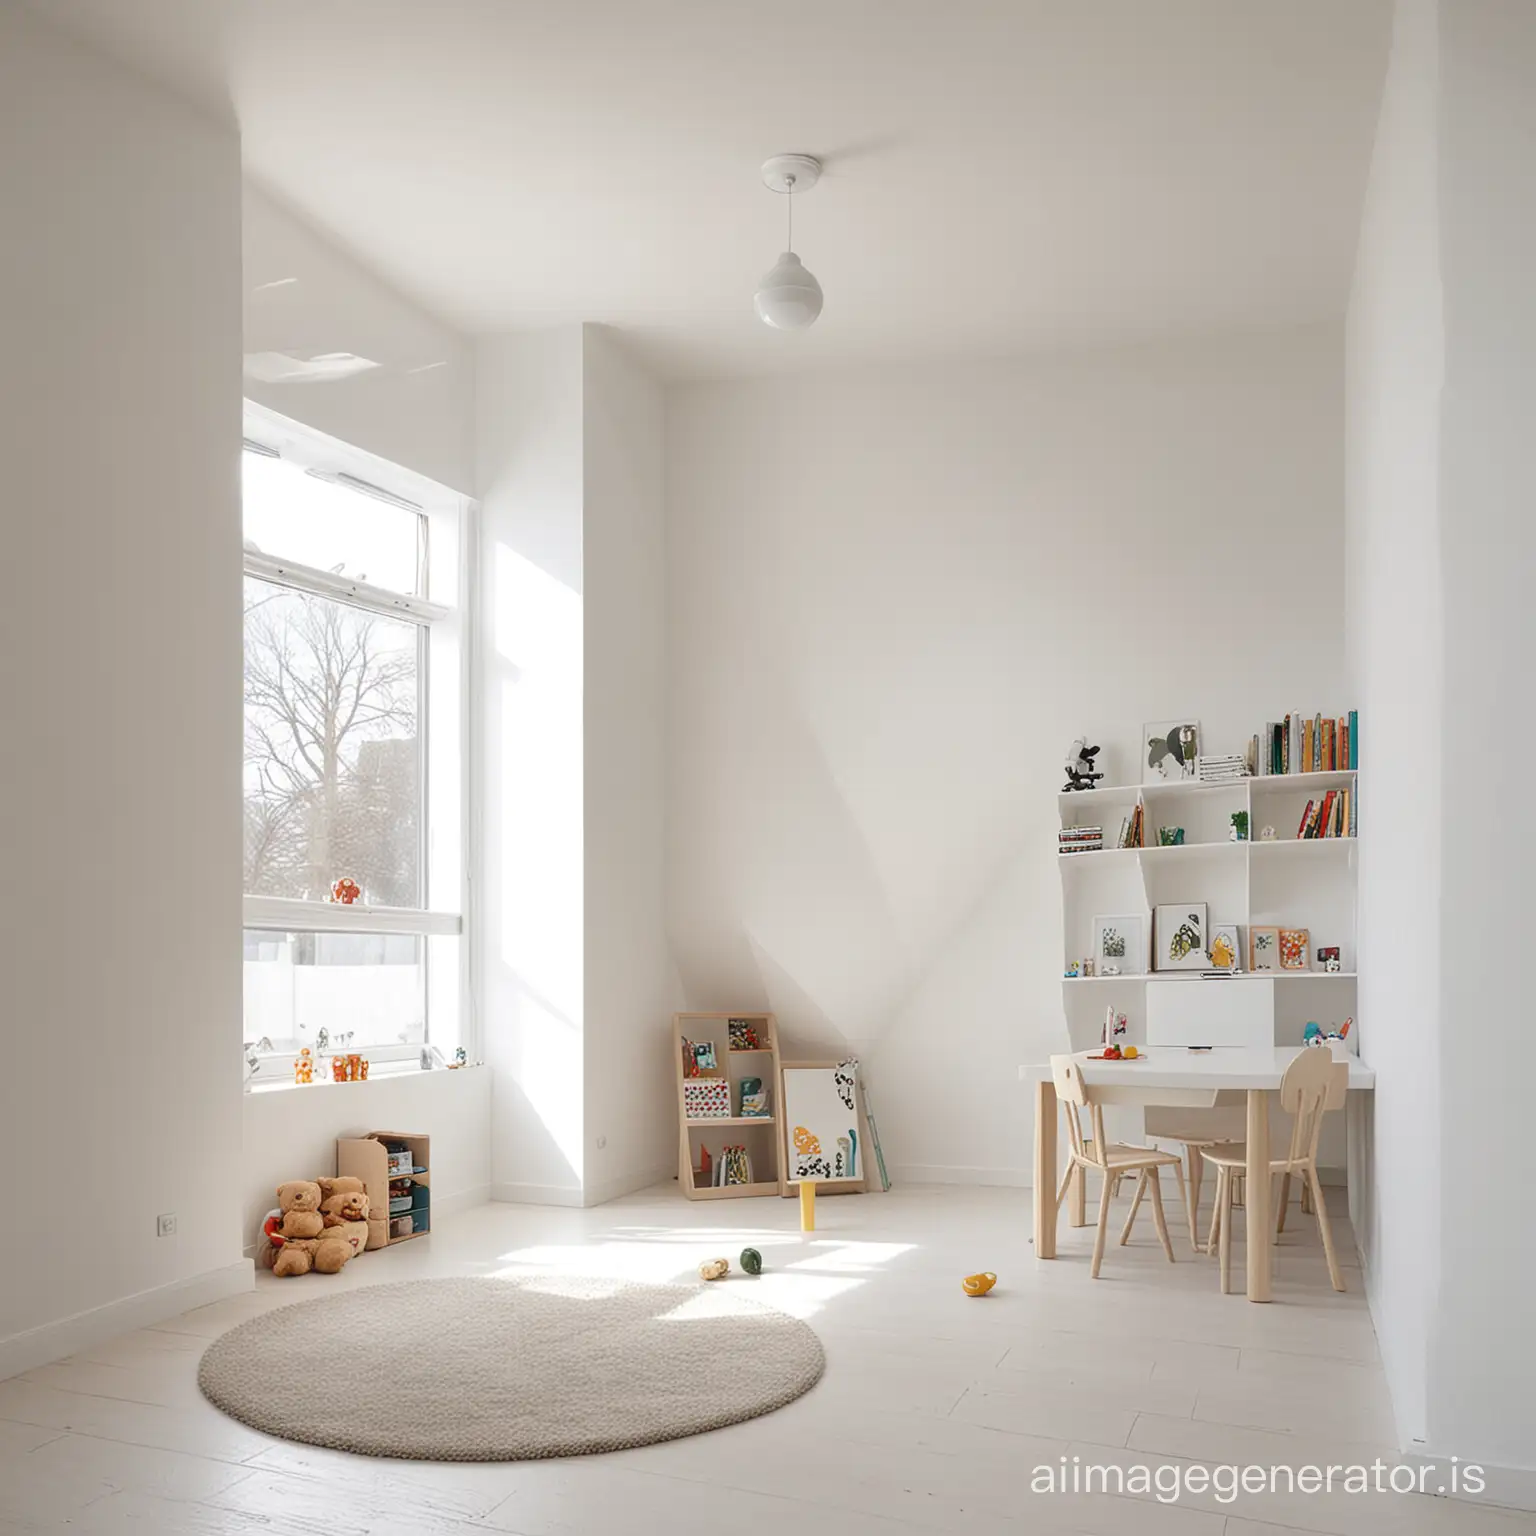 Playful-Childrens-Corner-in-a-Modern-White-Room